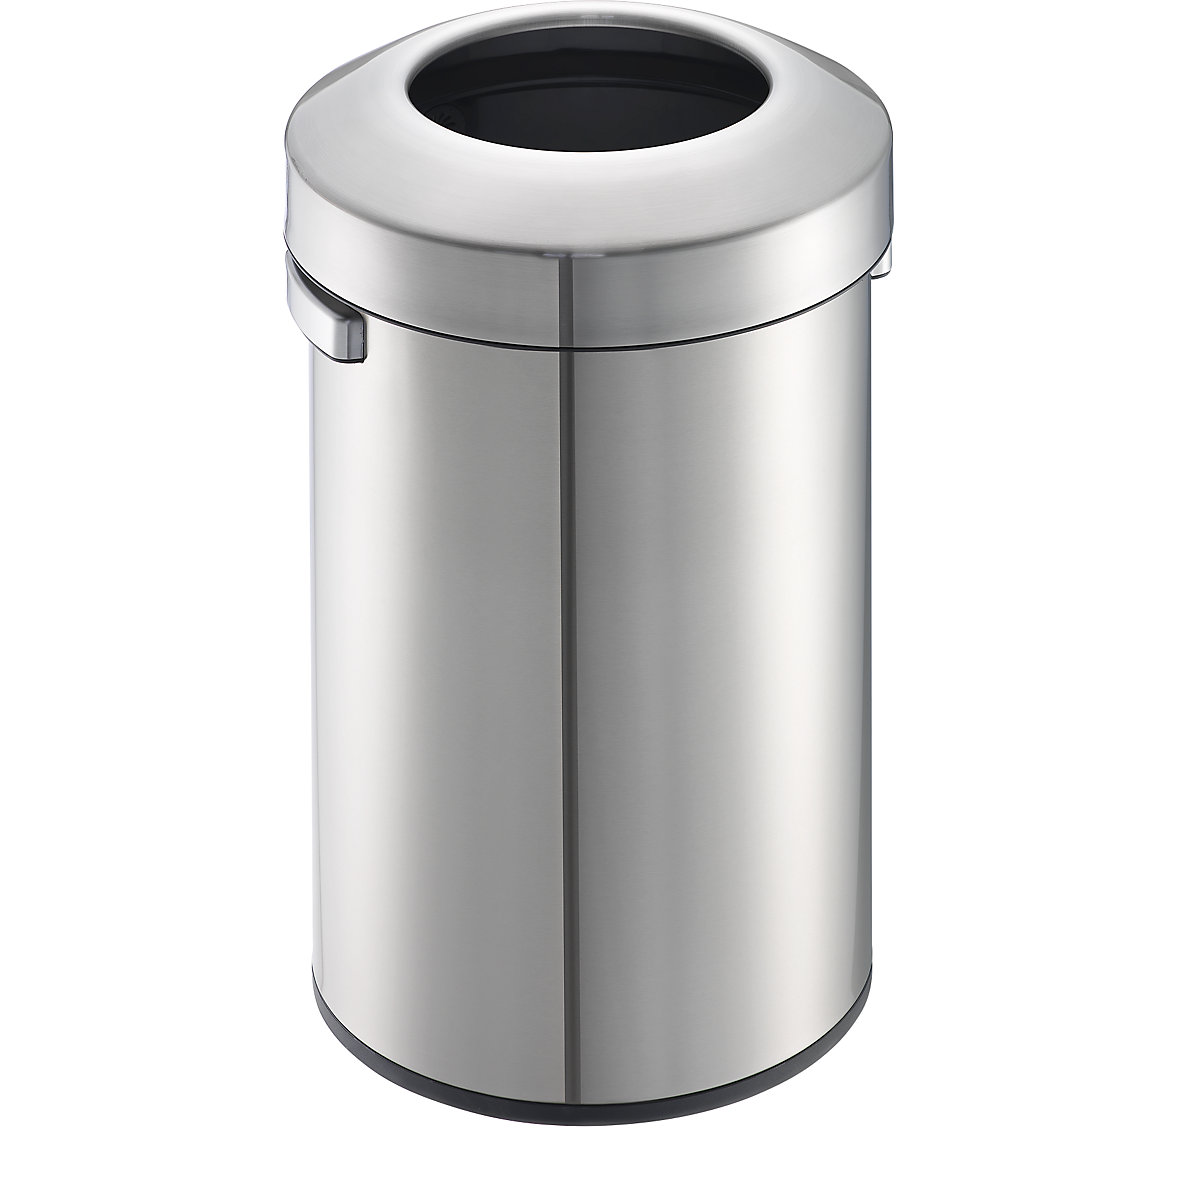 Dizajnerski spremnik za otpad velikog volumena – EKO (Prikaz proizvoda 5)-4